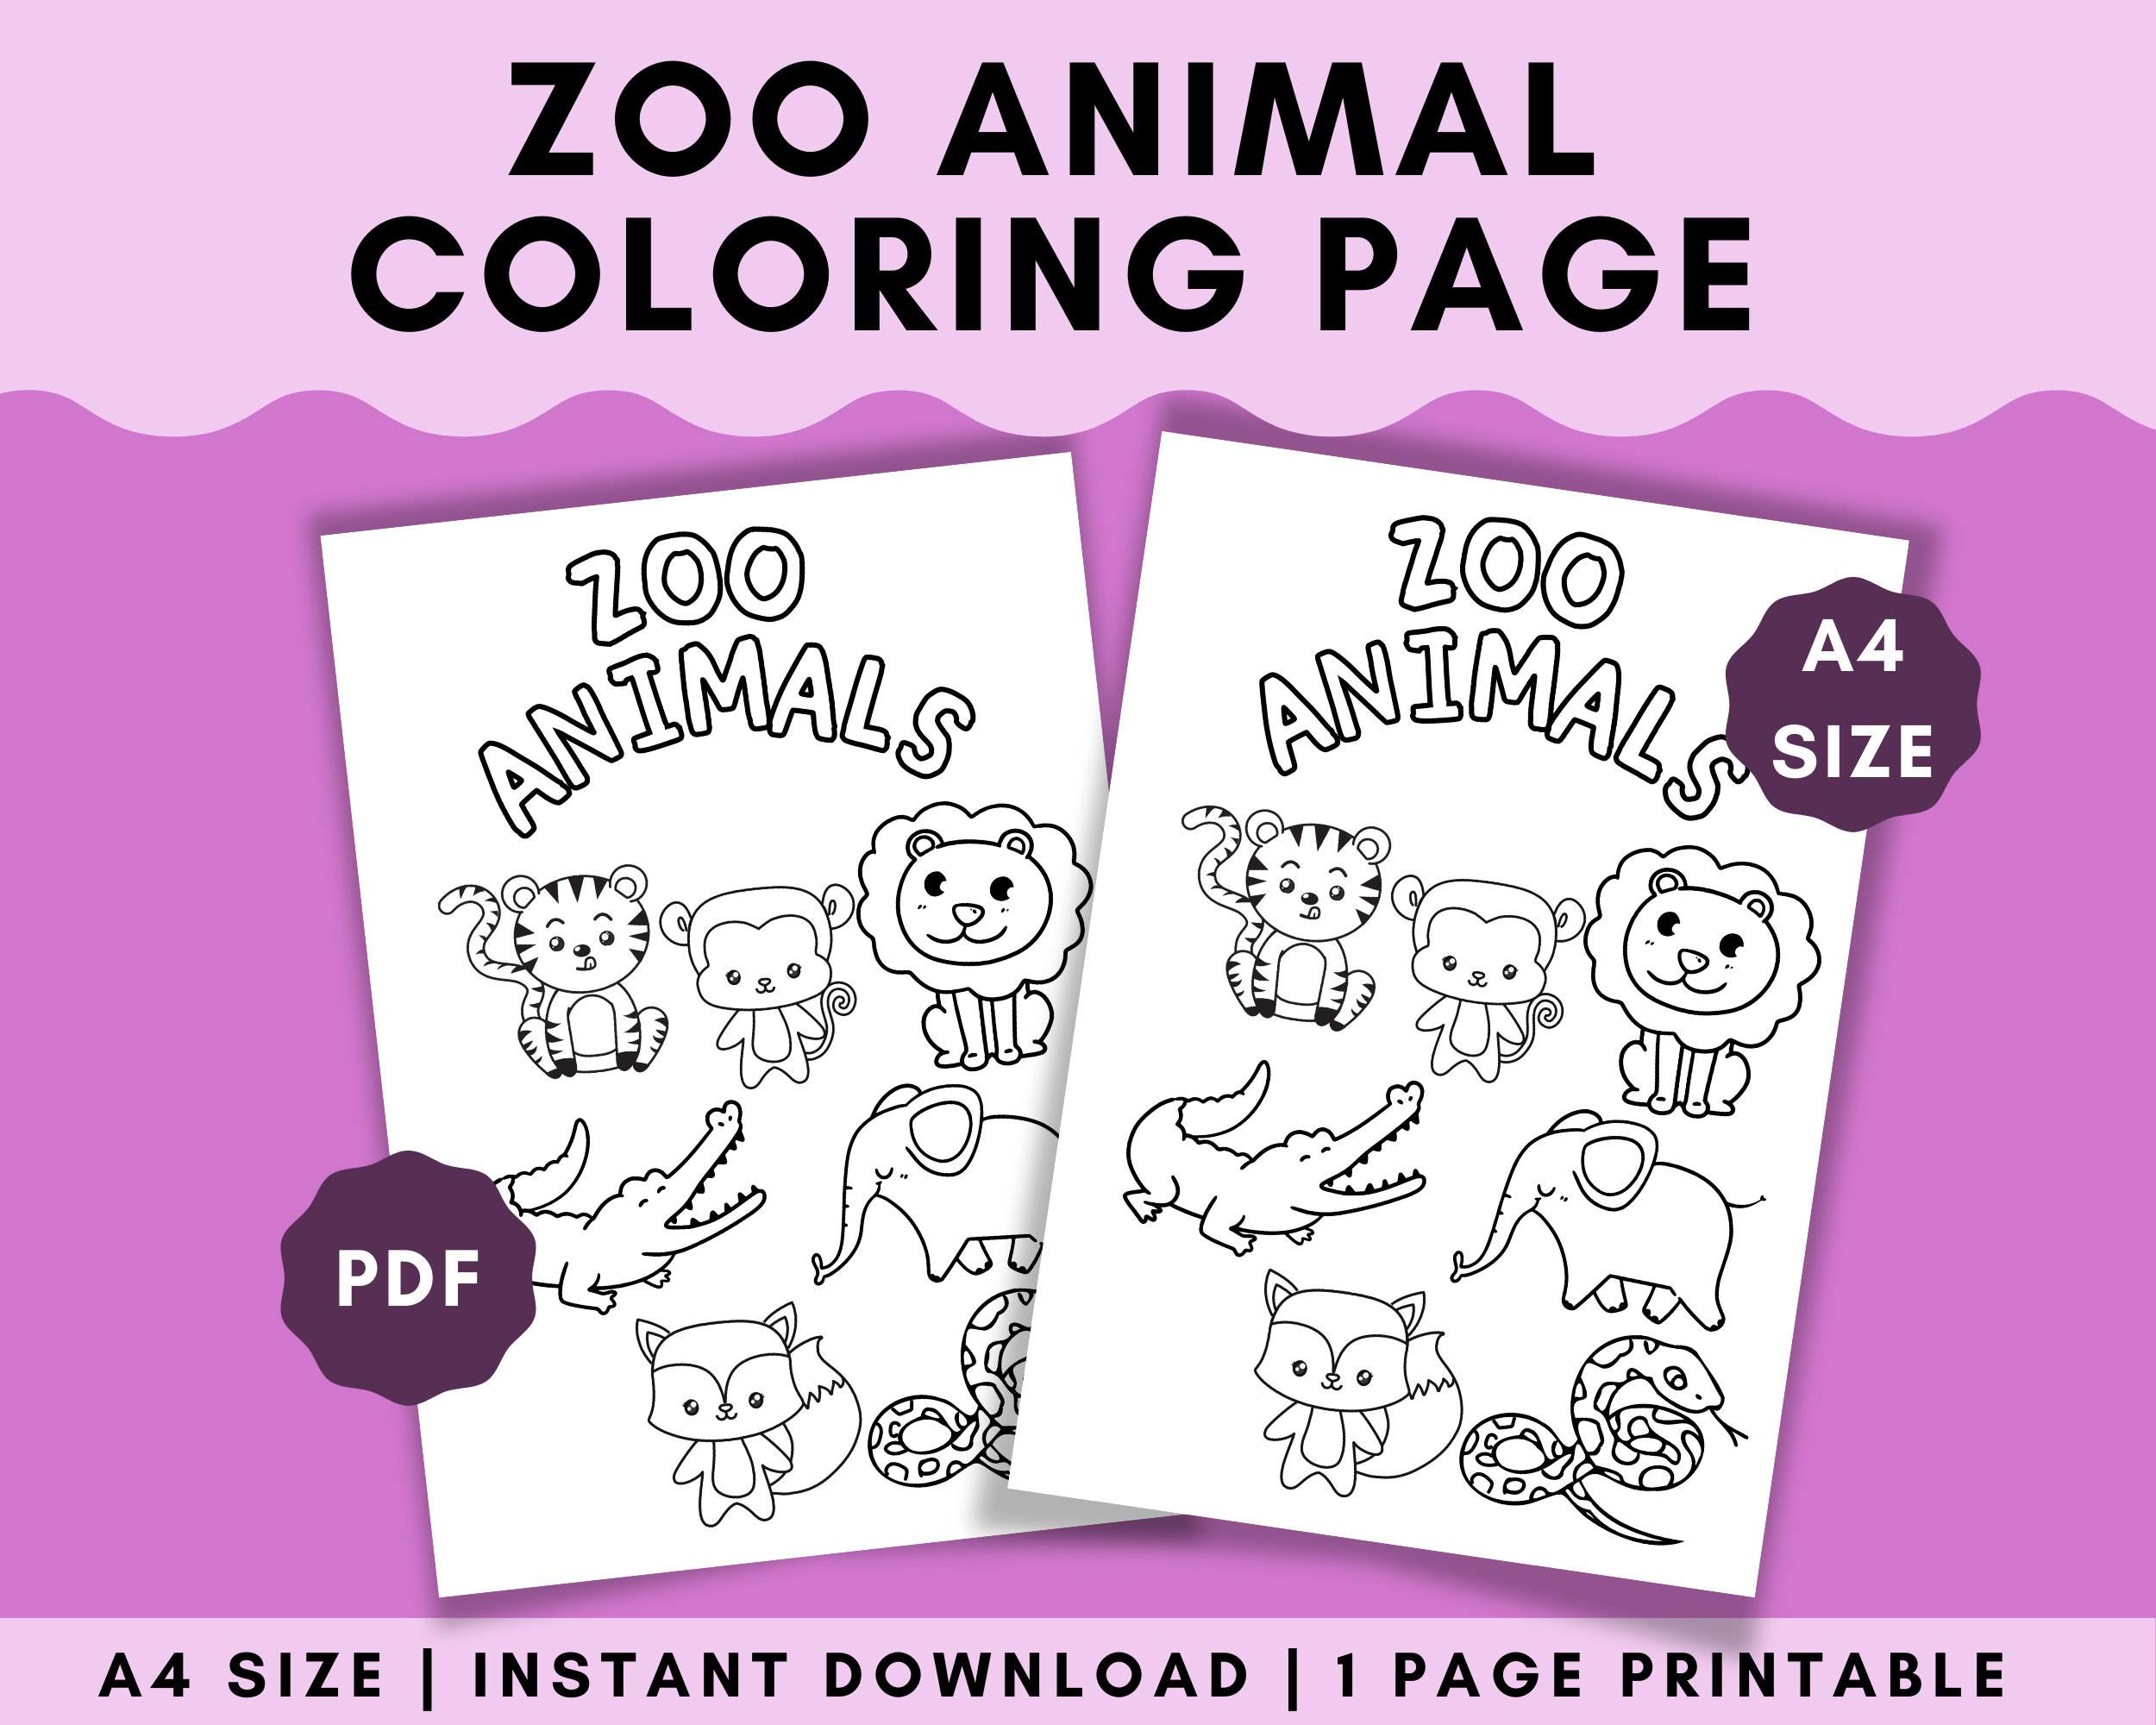 Printable coloring page zoo animal kids coloring pages zoo animal art animal coloring page instant download coloring art